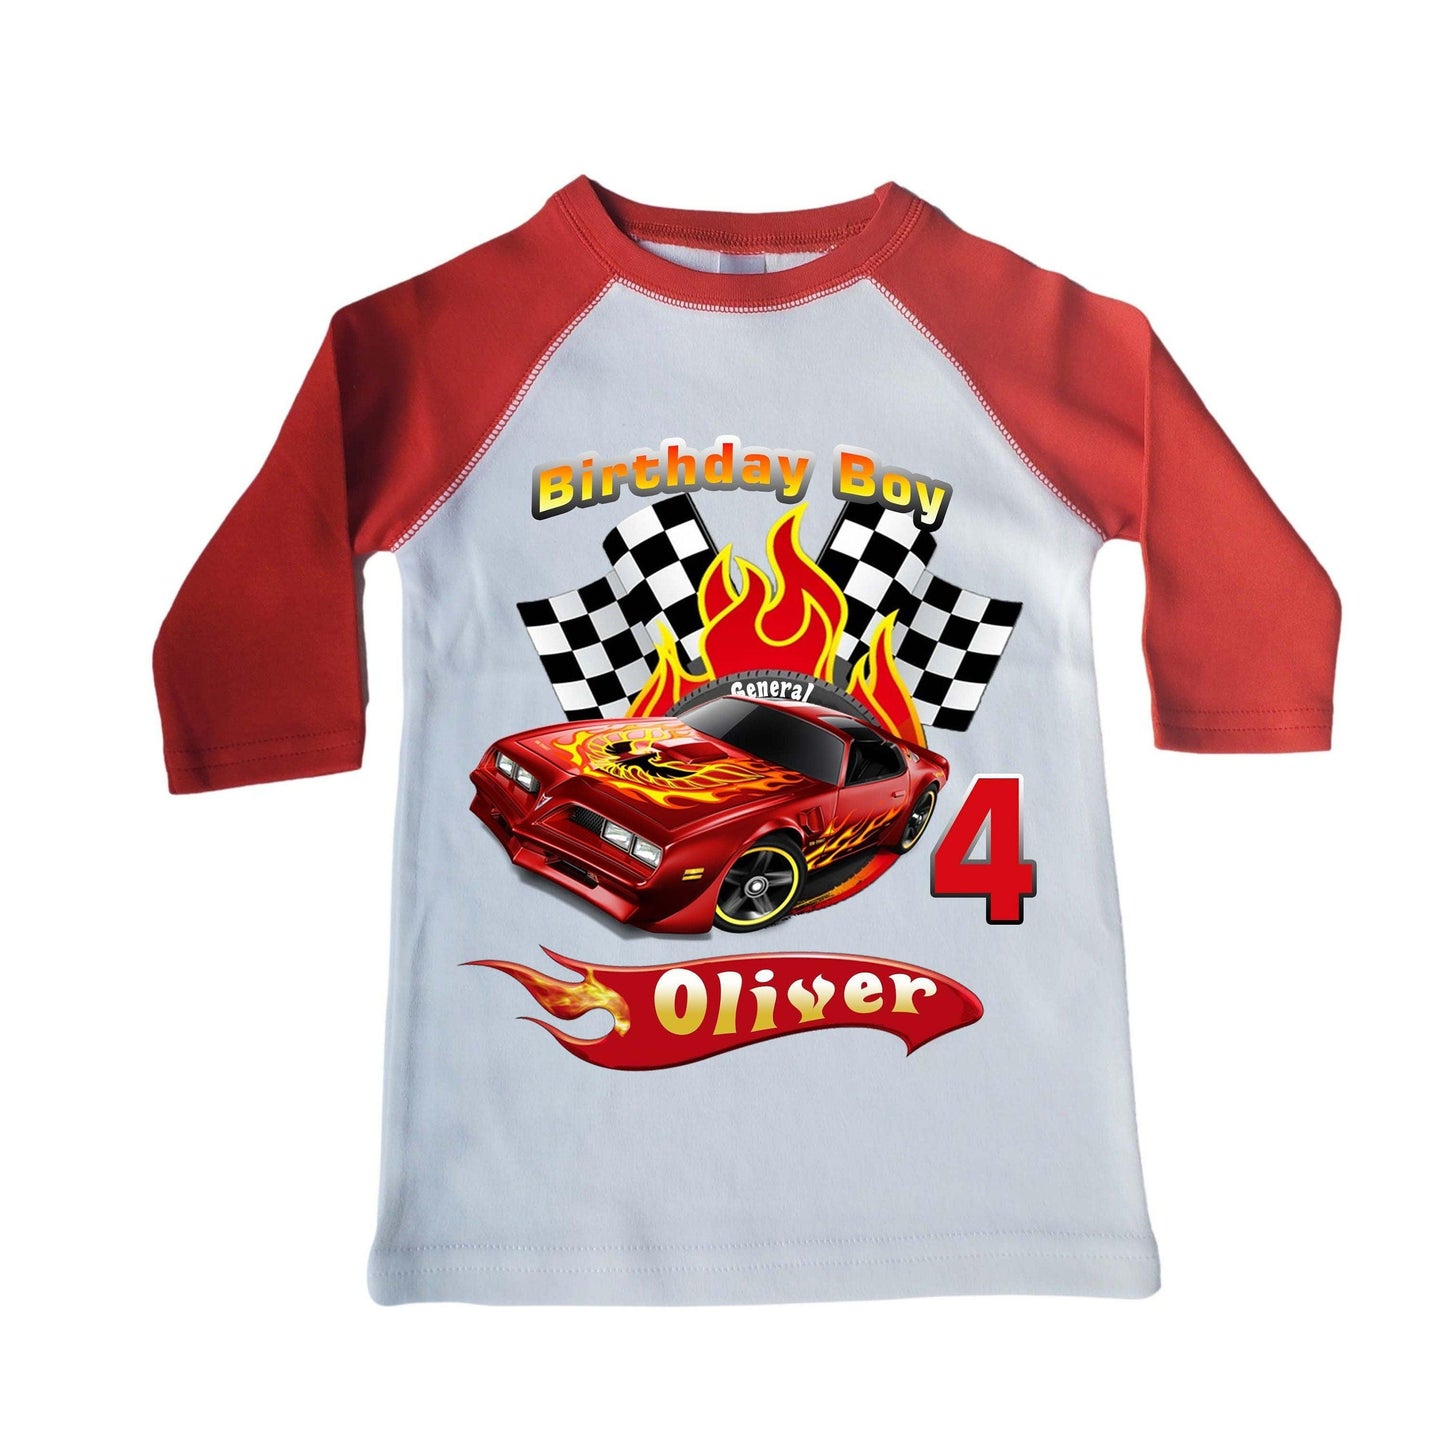 Race car birthday shirt red